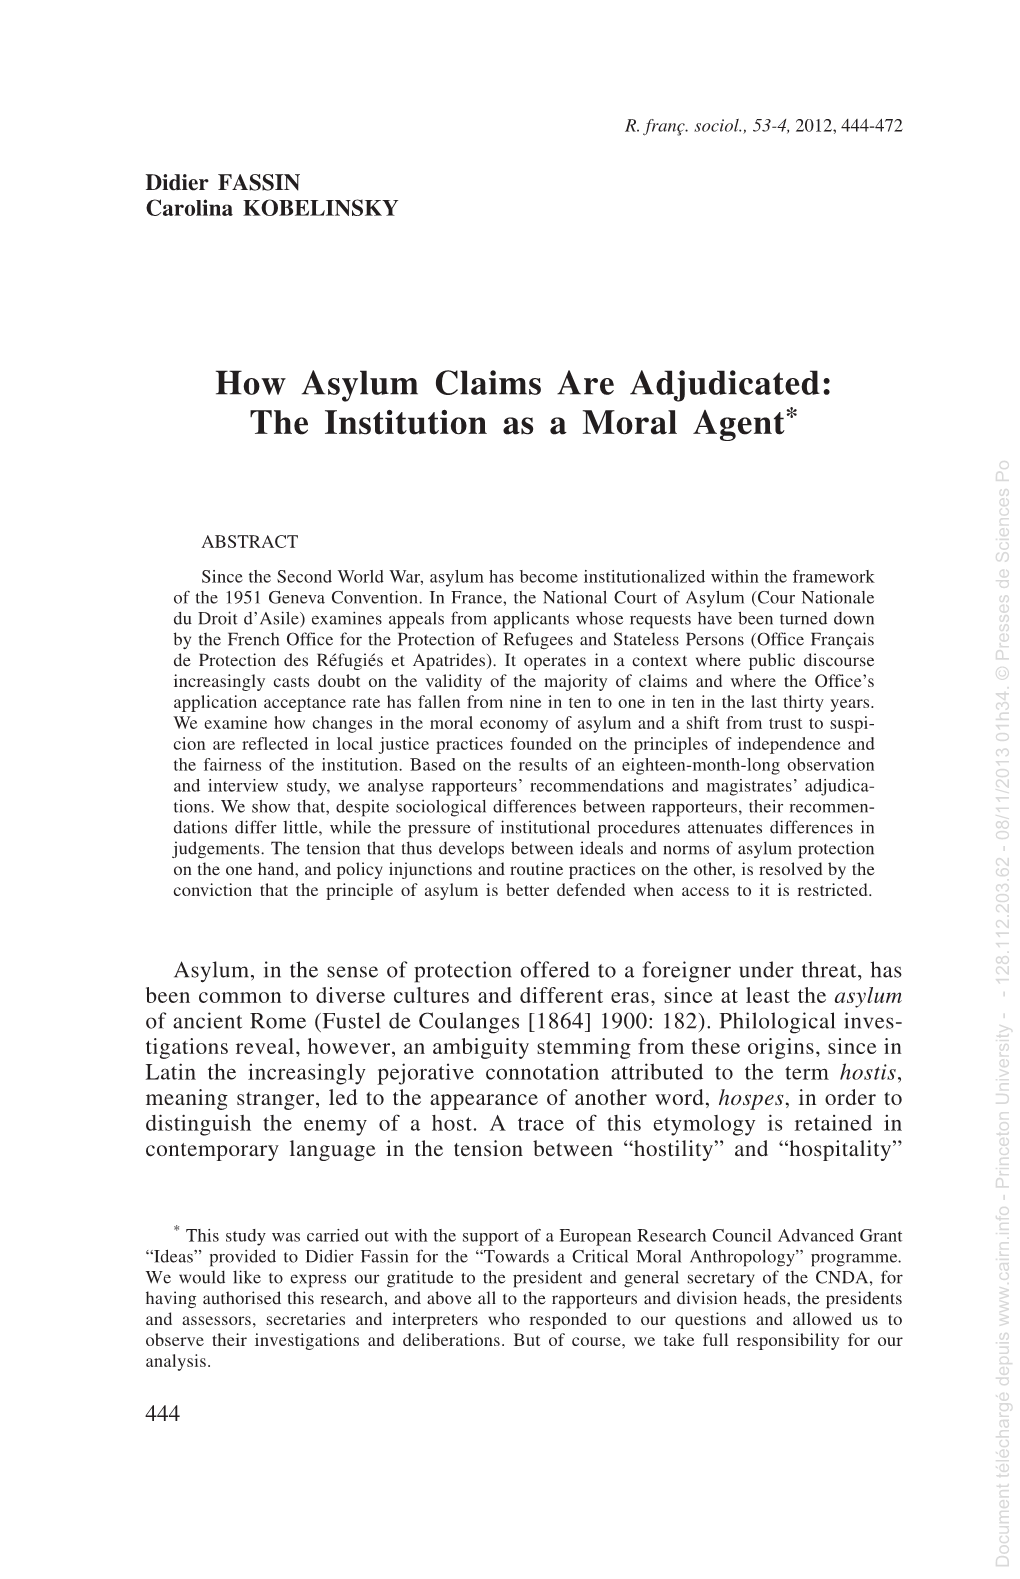 How Asylum Claims Are Adjudicated: the Institution As a Moral Agent* Document Téléchargé Depuis - Princeton University 128.112.203.62 08/11/2013 01H34